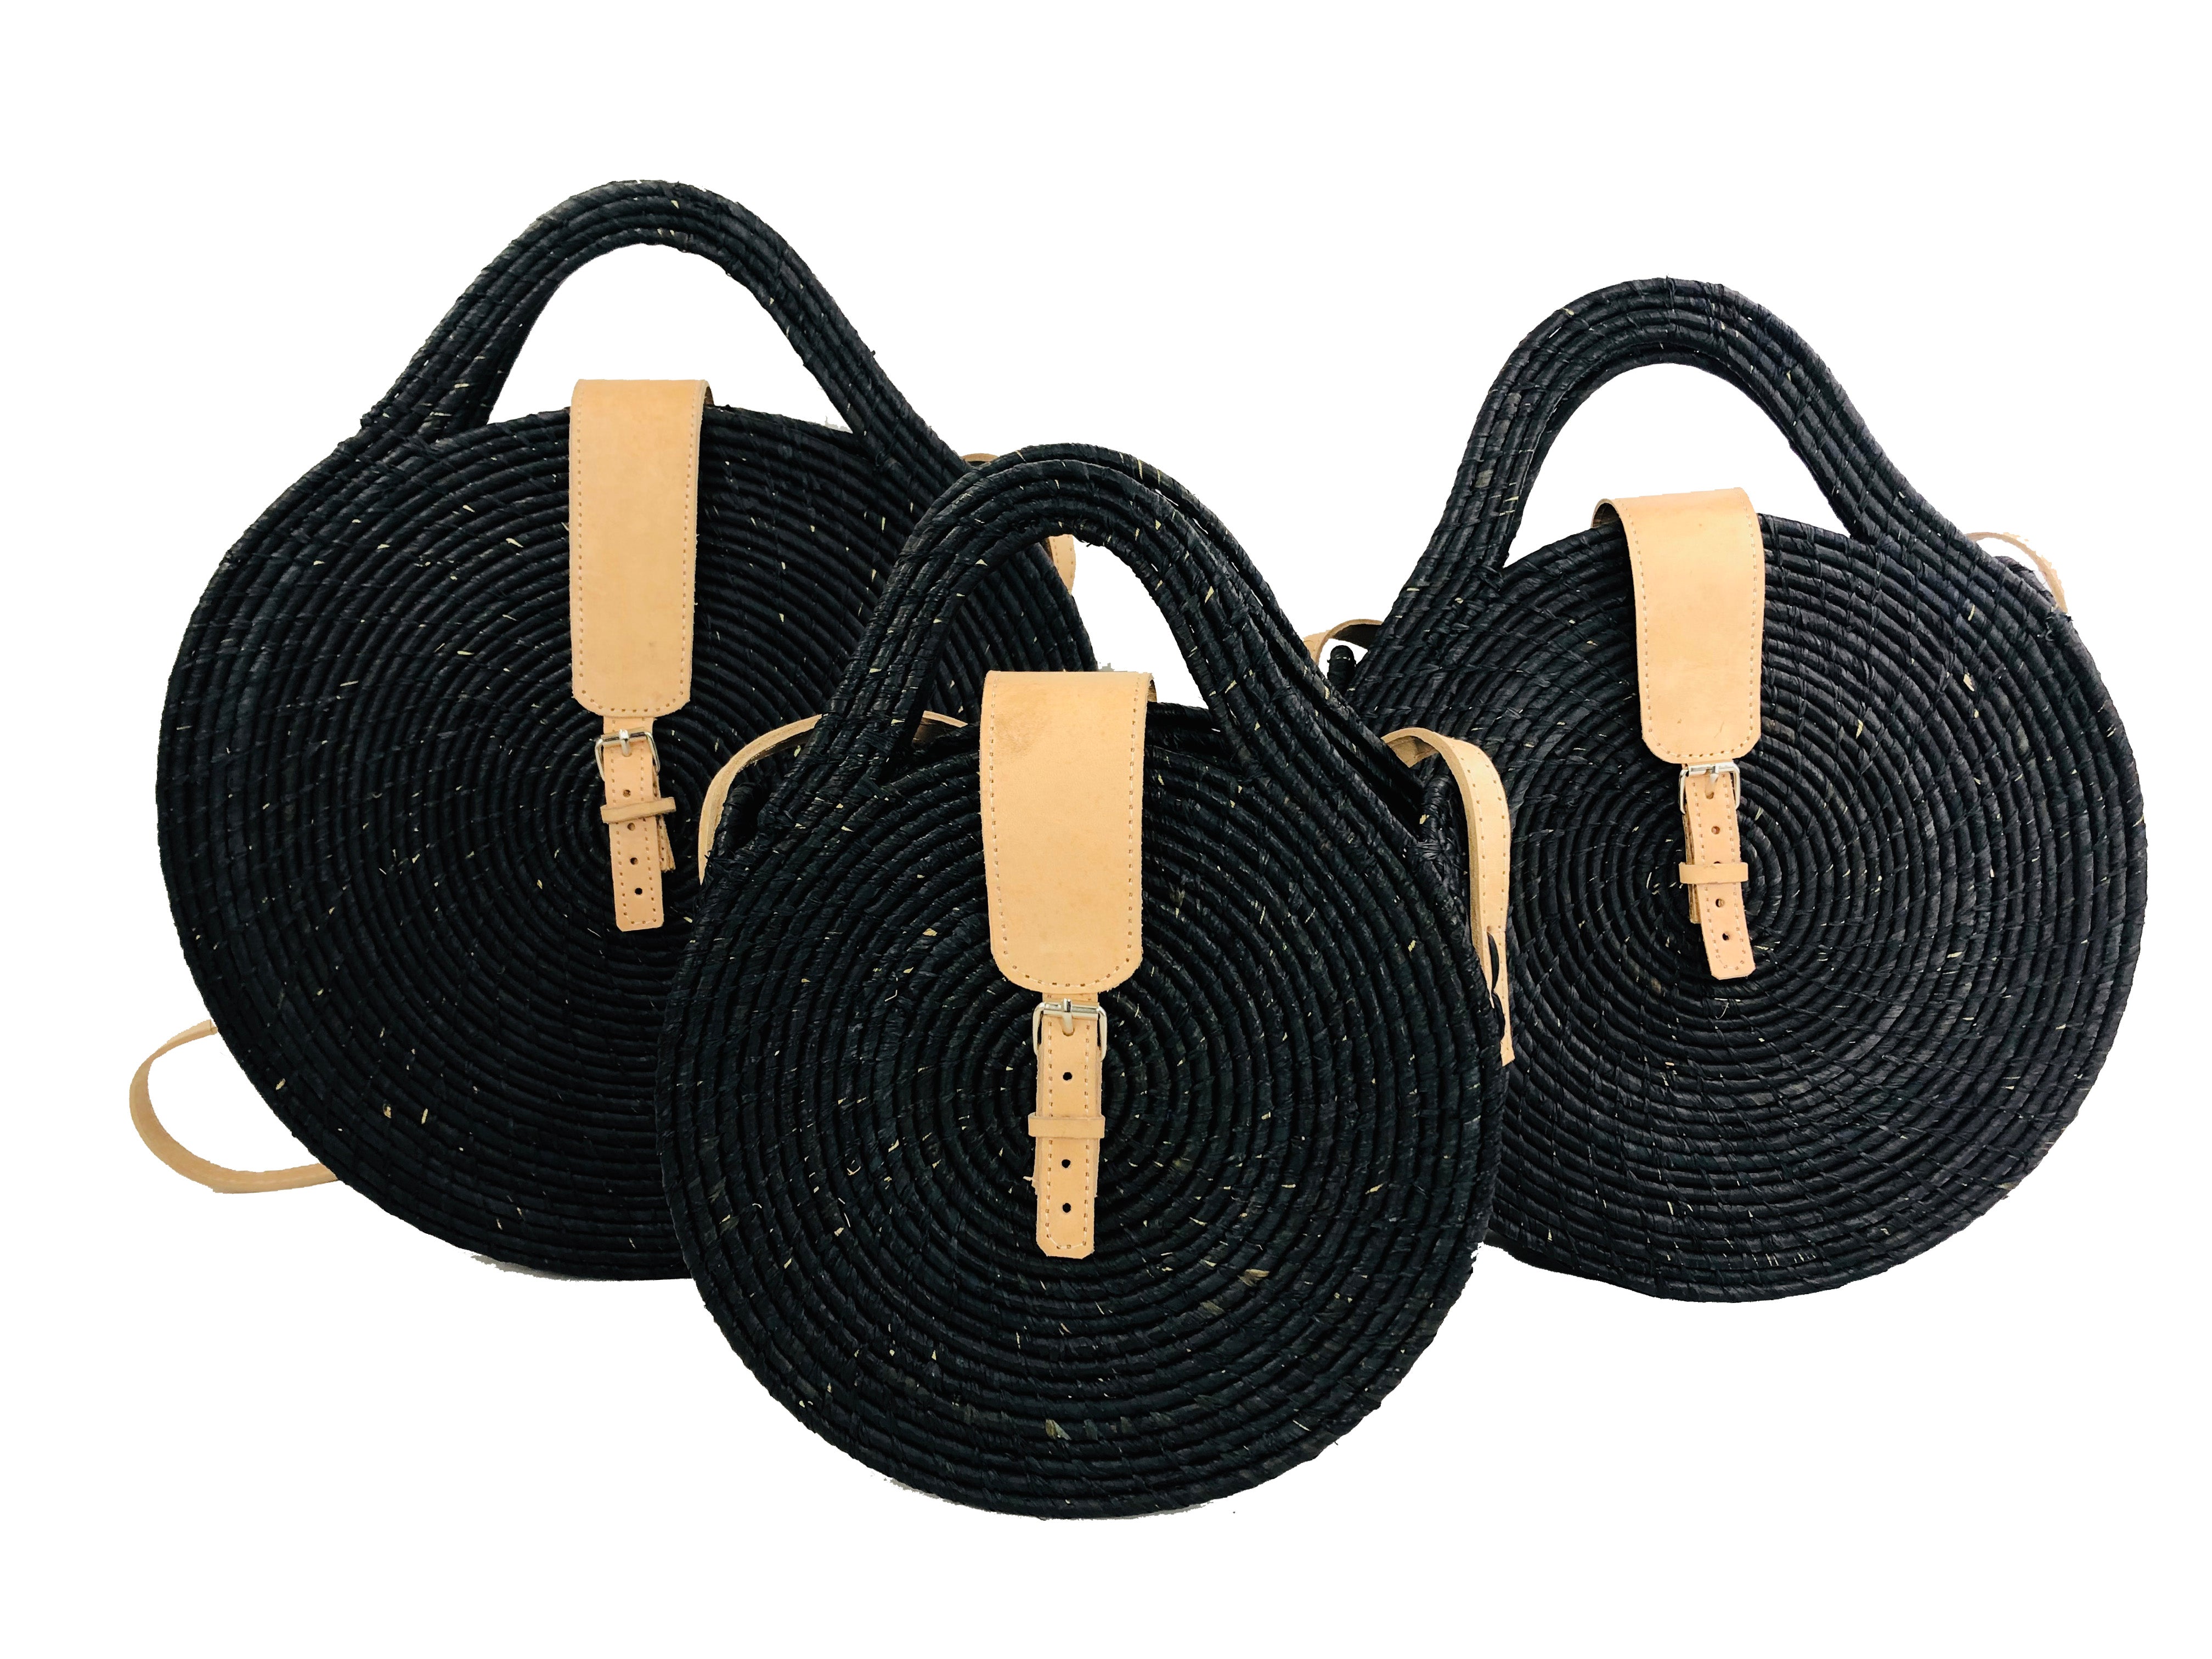 Buy TASLAR Handwoven Round Rattan Bag Women Beach Straw Woven Crossbody Bag Purse  Handbag Shoulder Bag with Leather Strap at Amazon.in